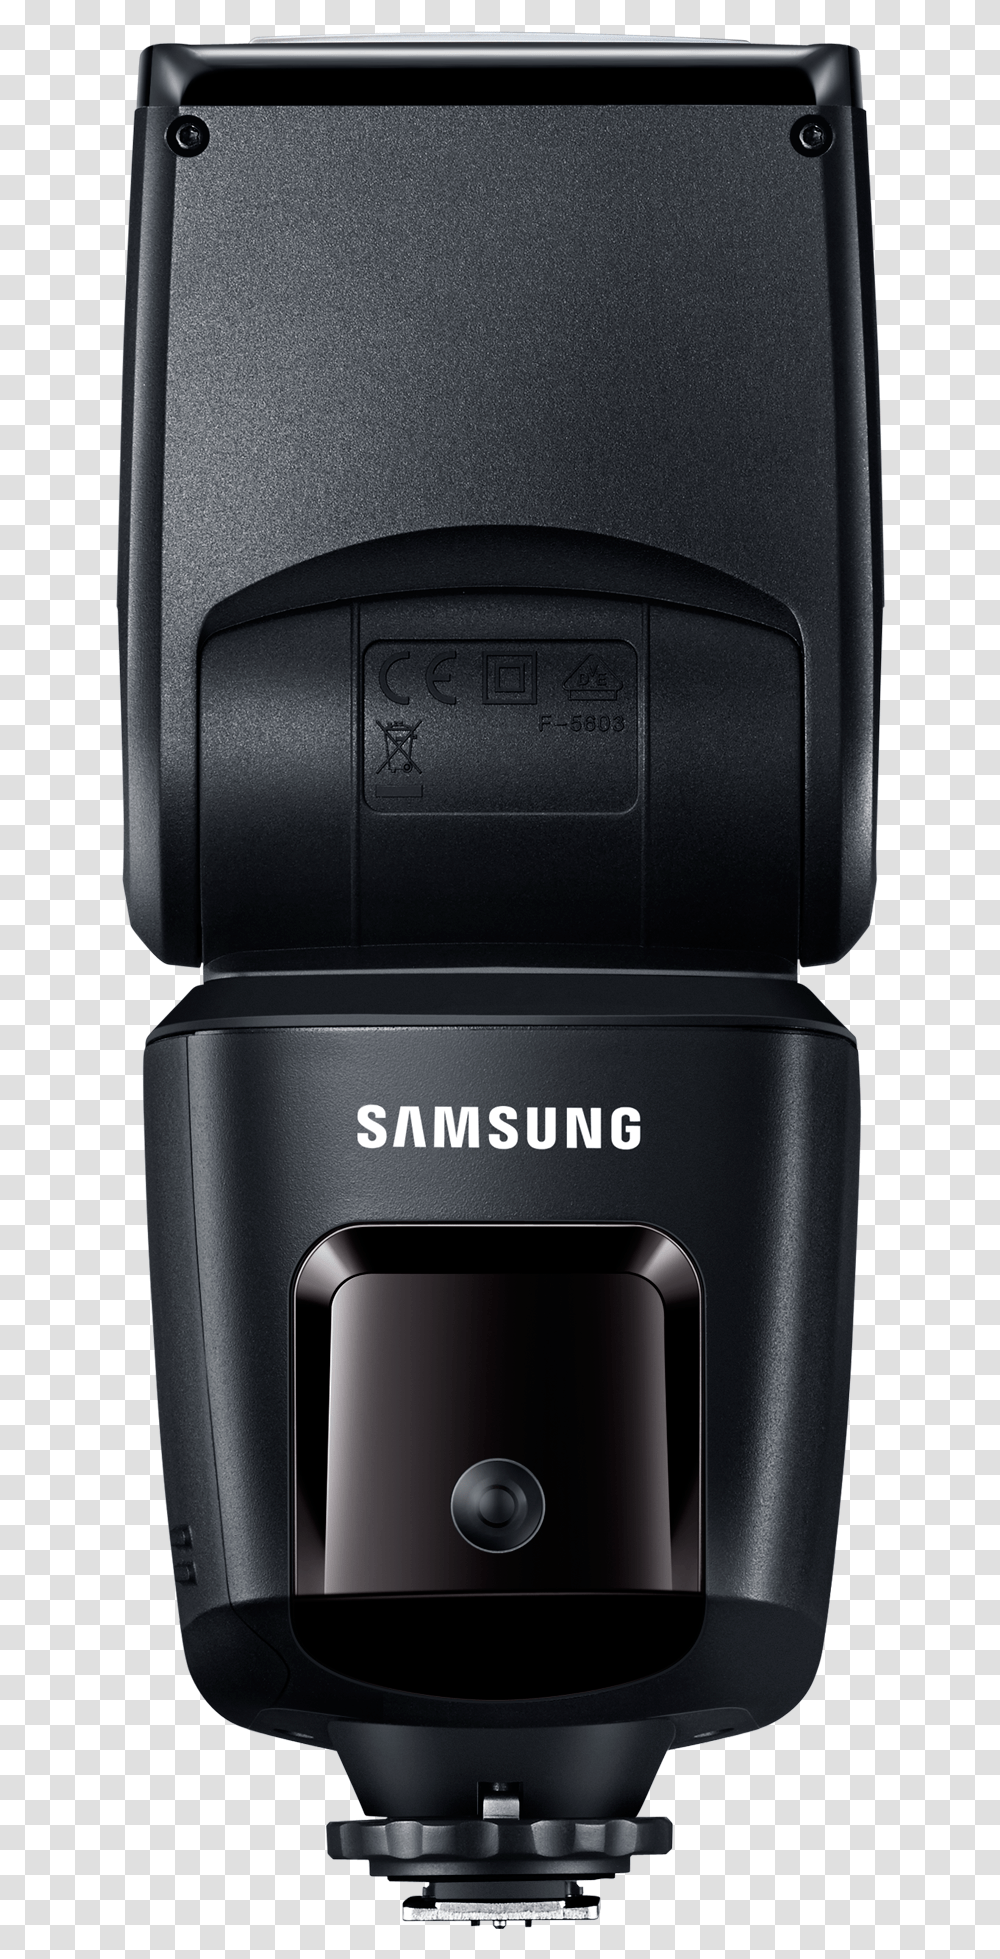 Samsung Sef580a Professional Off Camera Flash Samsung Uk Feature Phone, Electronics, Digital Camera, Webcam, Video Camera Transparent Png